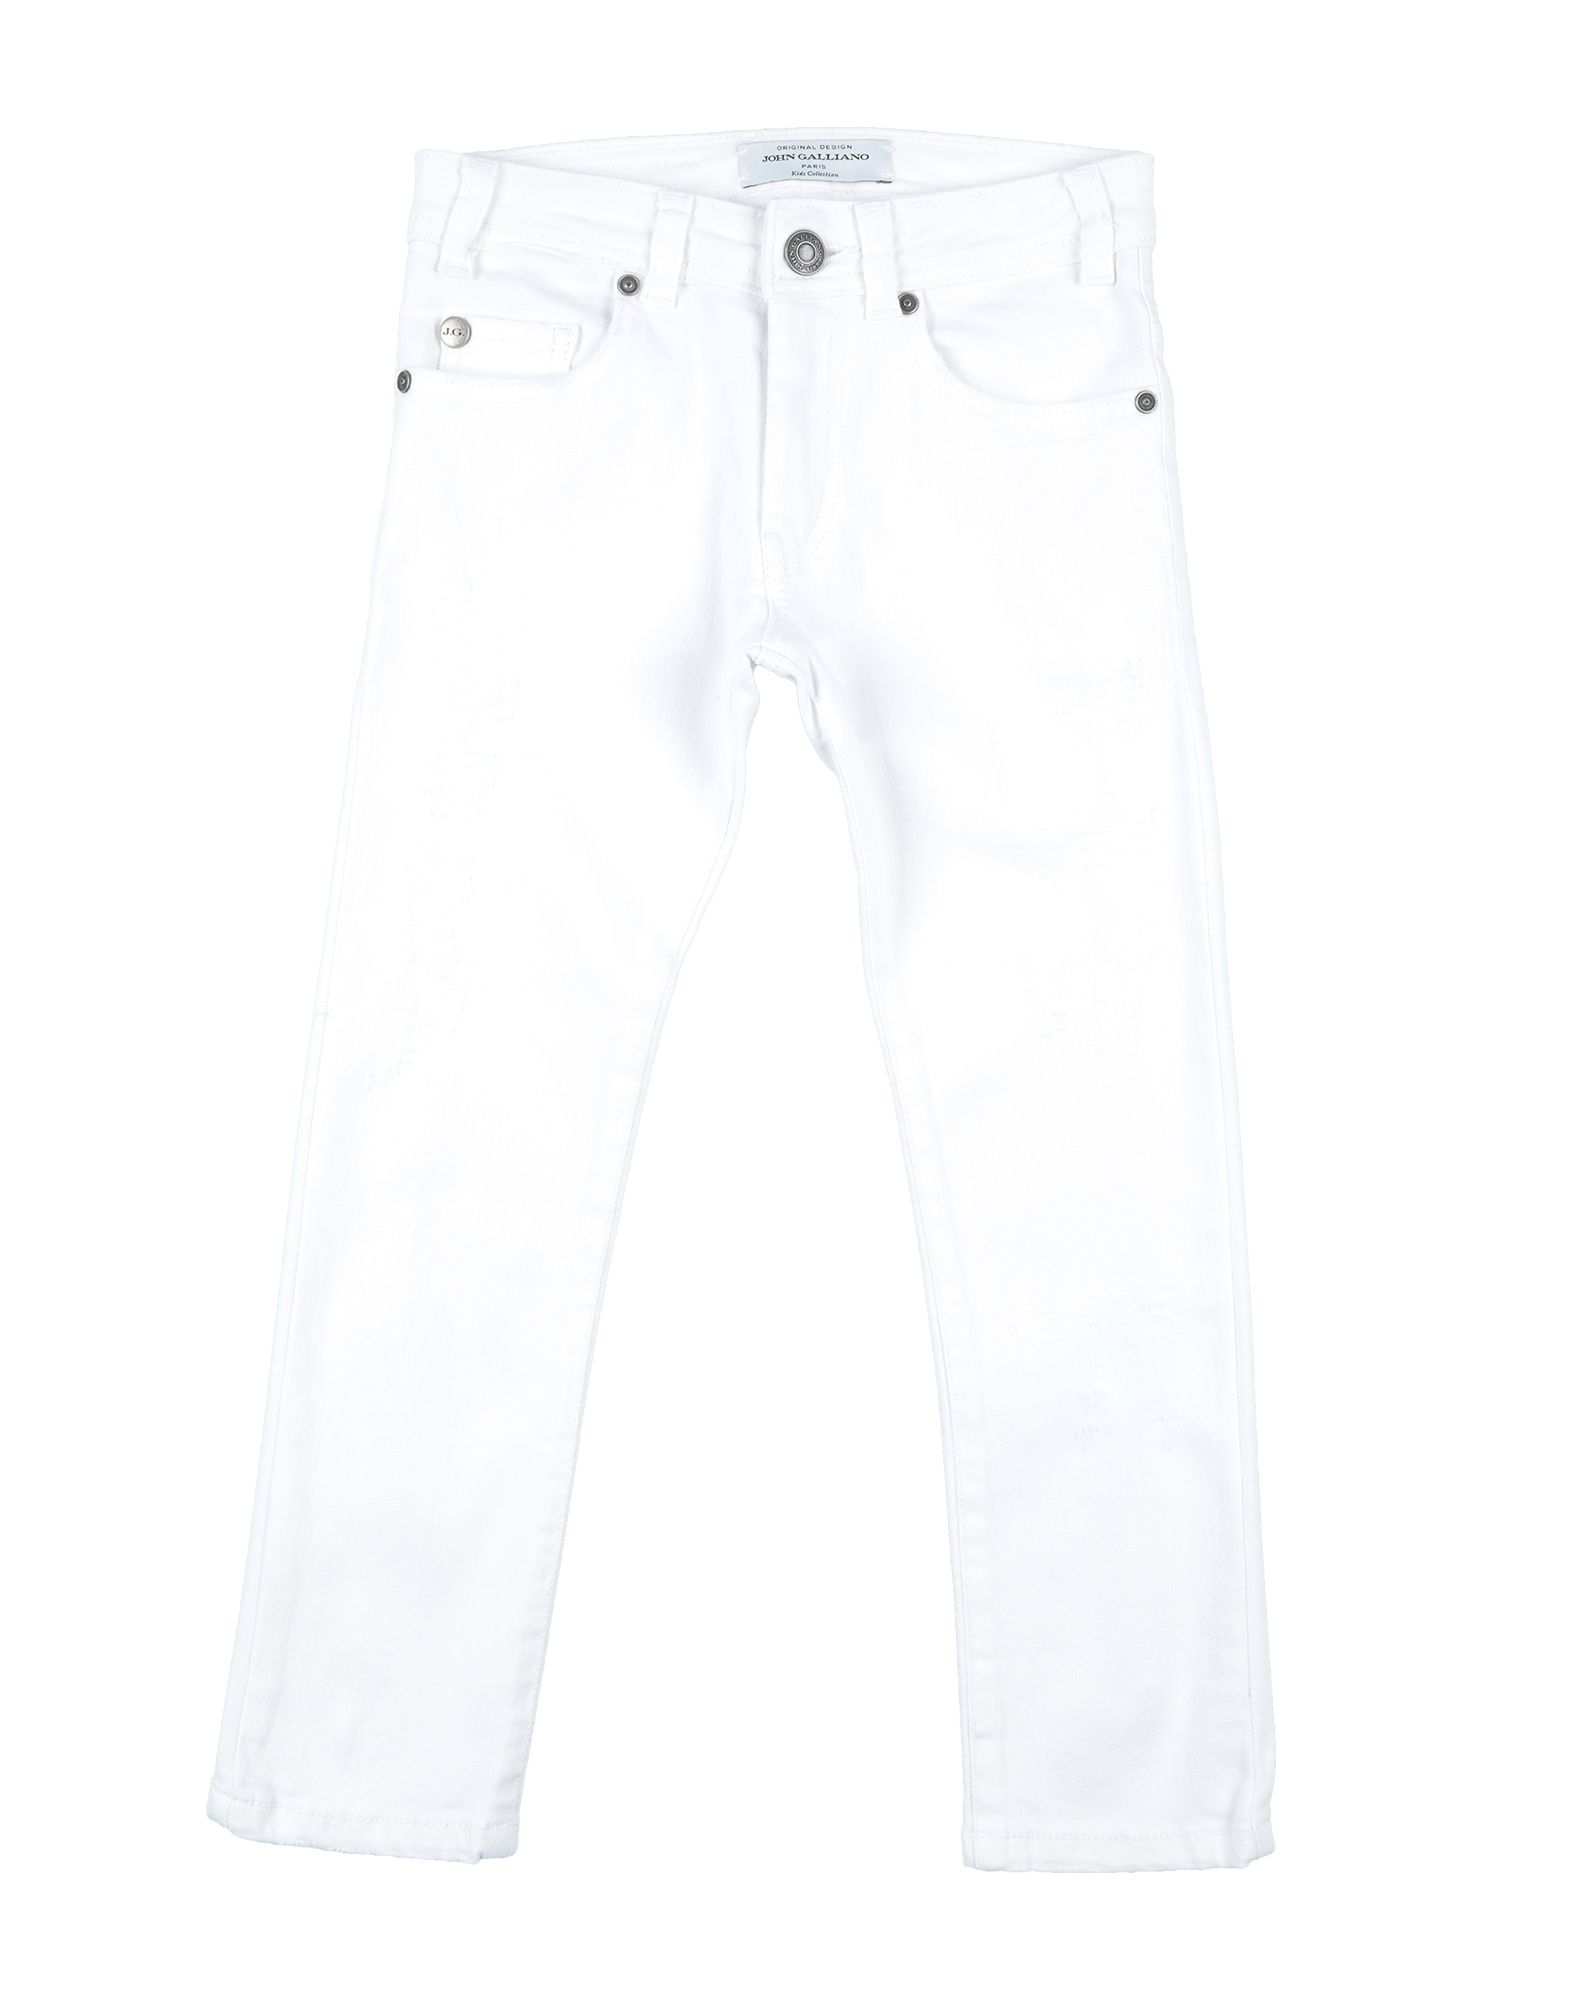 JOHN GALLIANOJOHN GALLIANO Jeans | DailyMail